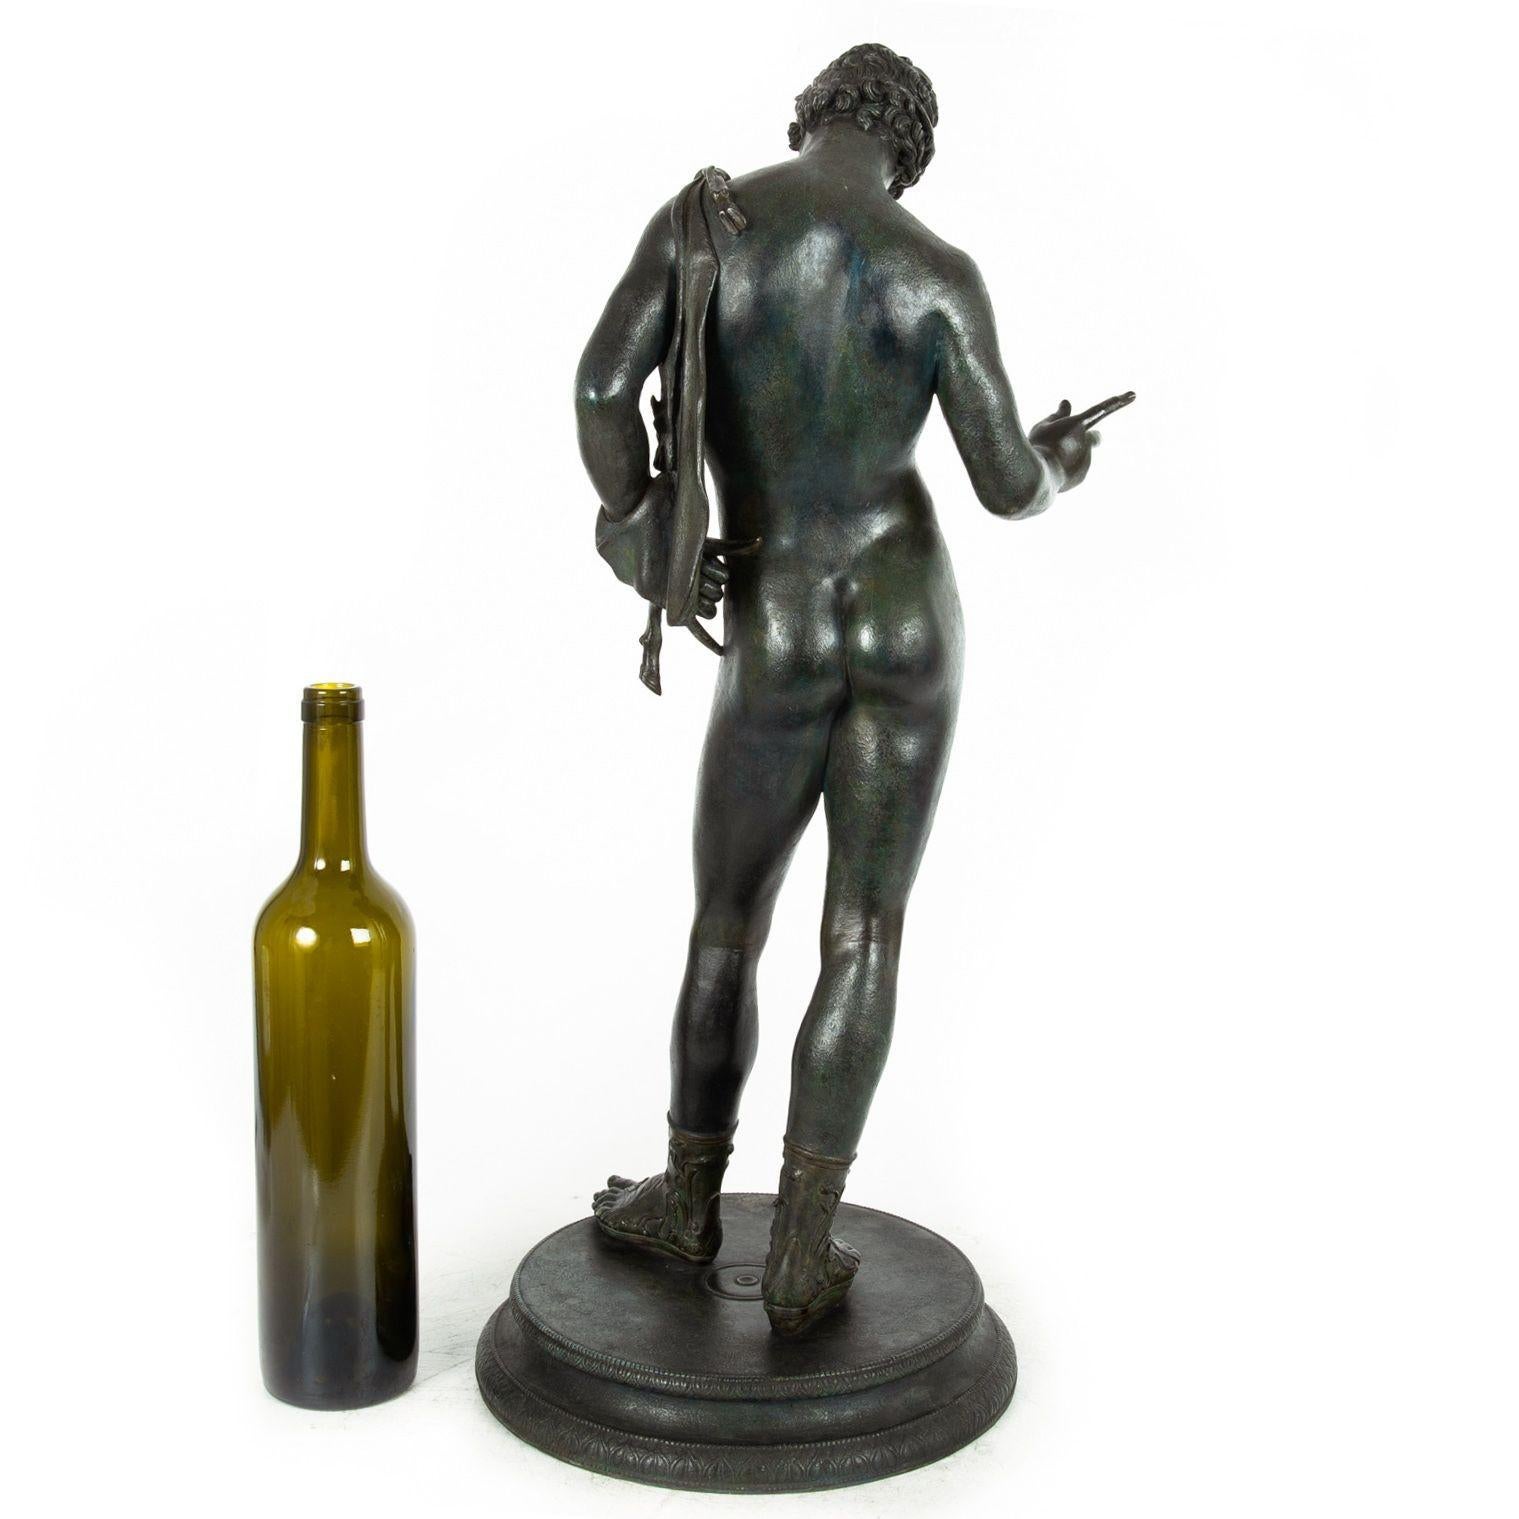 20th Century Italian Grand Tour Bronze Sculpture Statue “Narcissus” after Antiquity